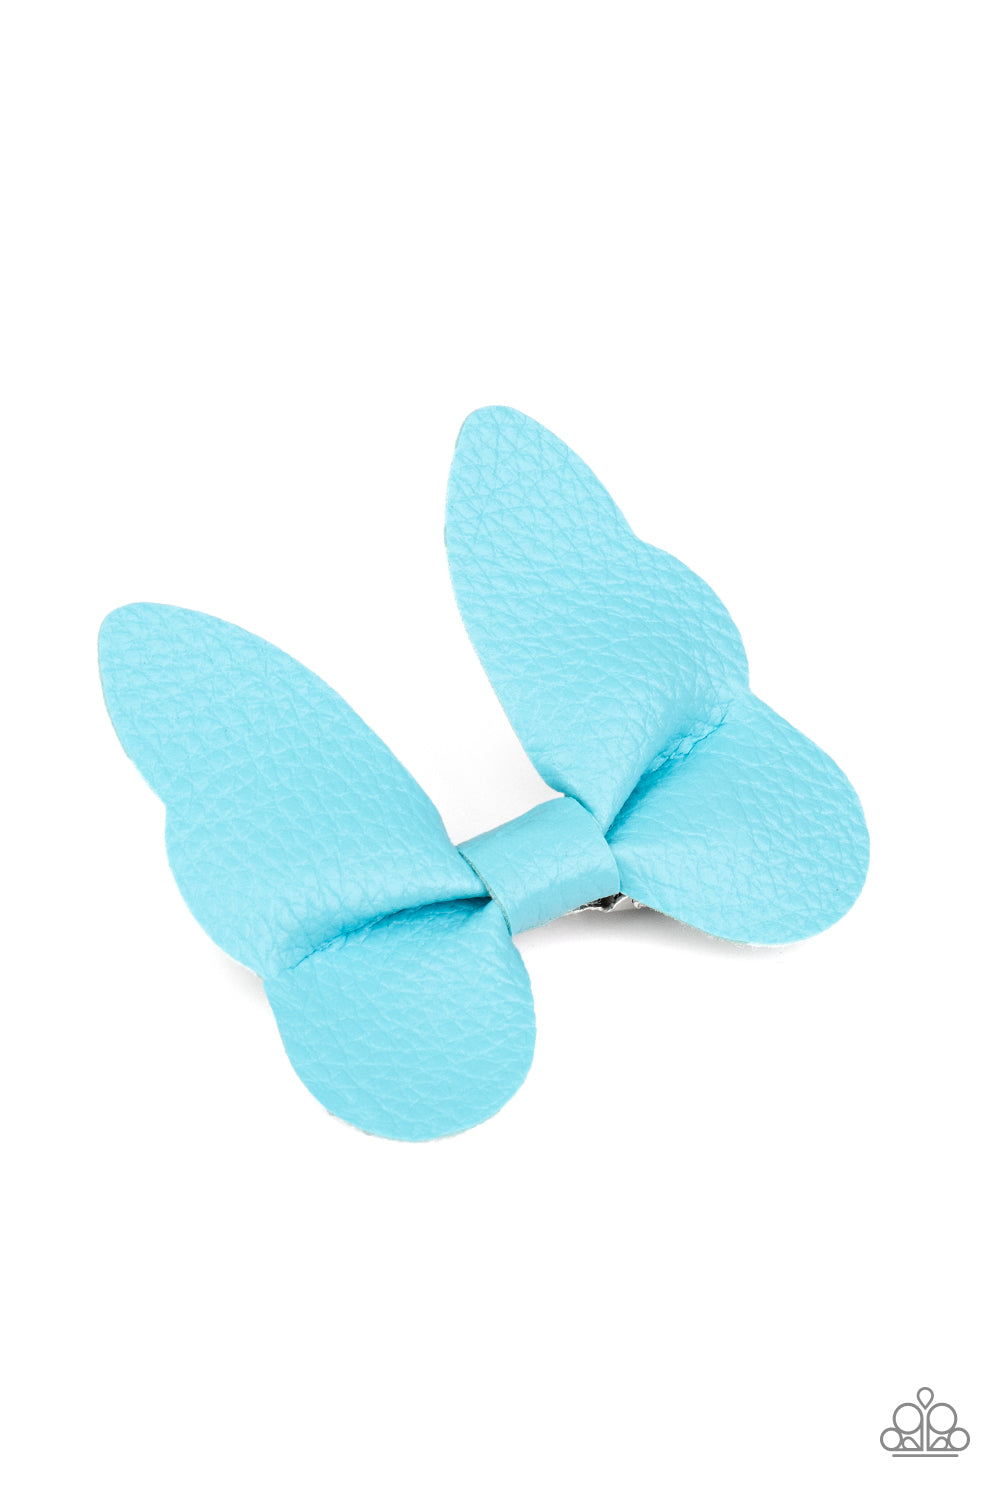 Butterfly Oasis - Blue